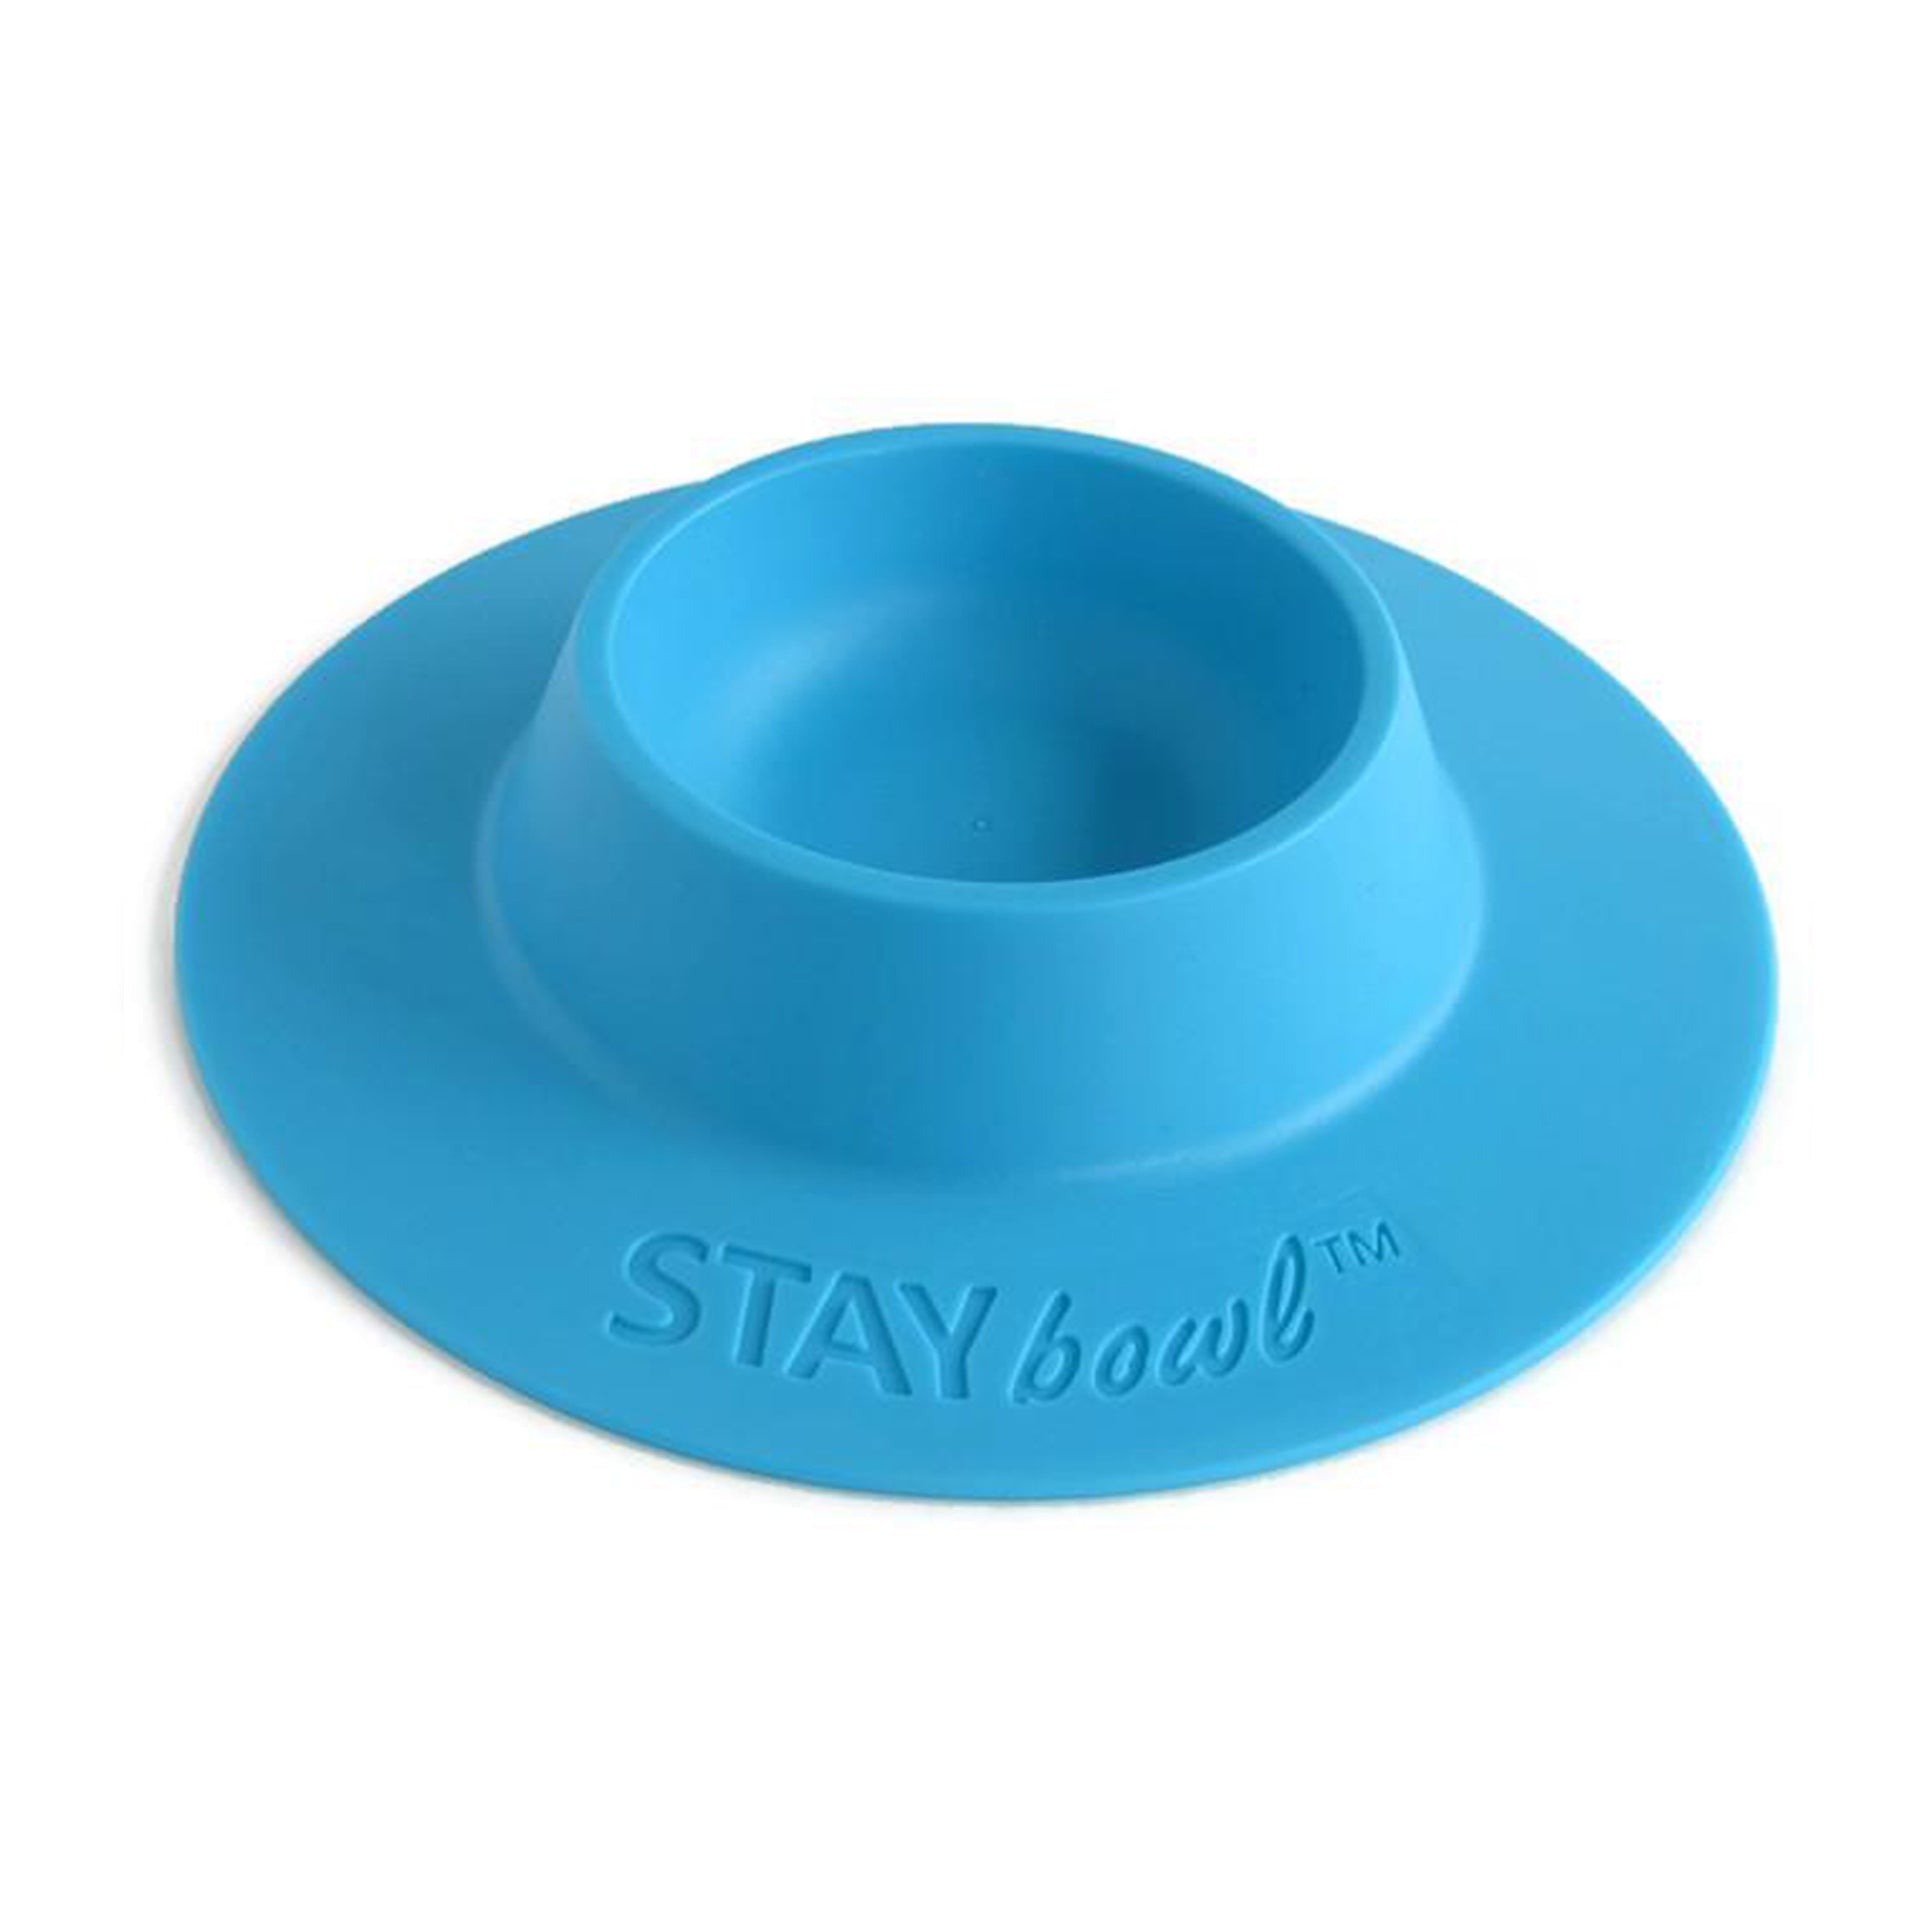 STAYbowl® Tip-proof Food Bowl